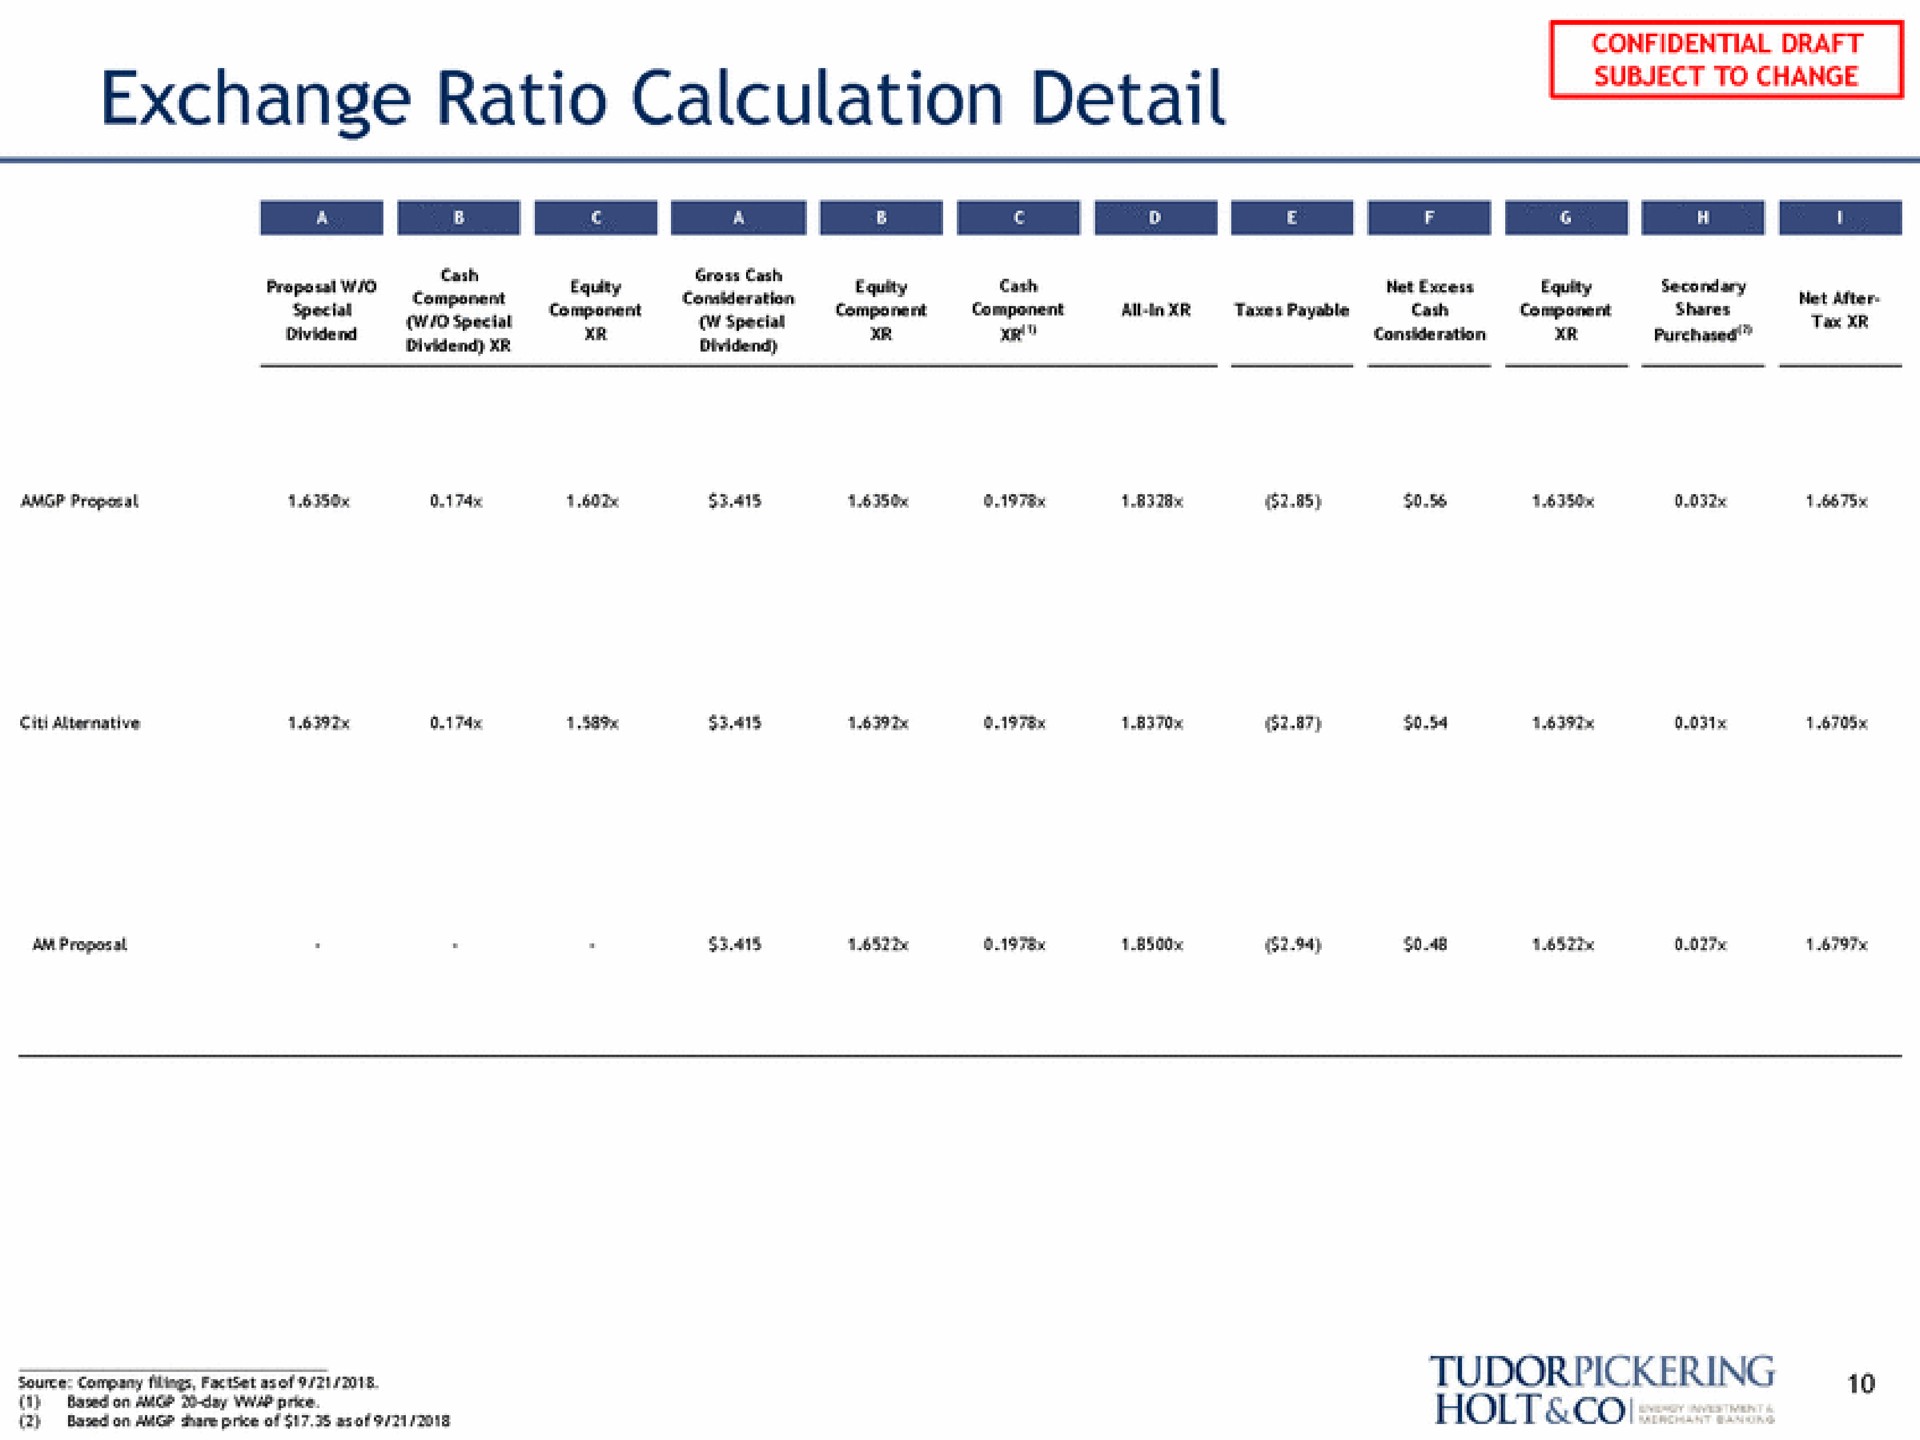 exchange ratio calculation detail holt | Tudor, Pickering, Holt & Co